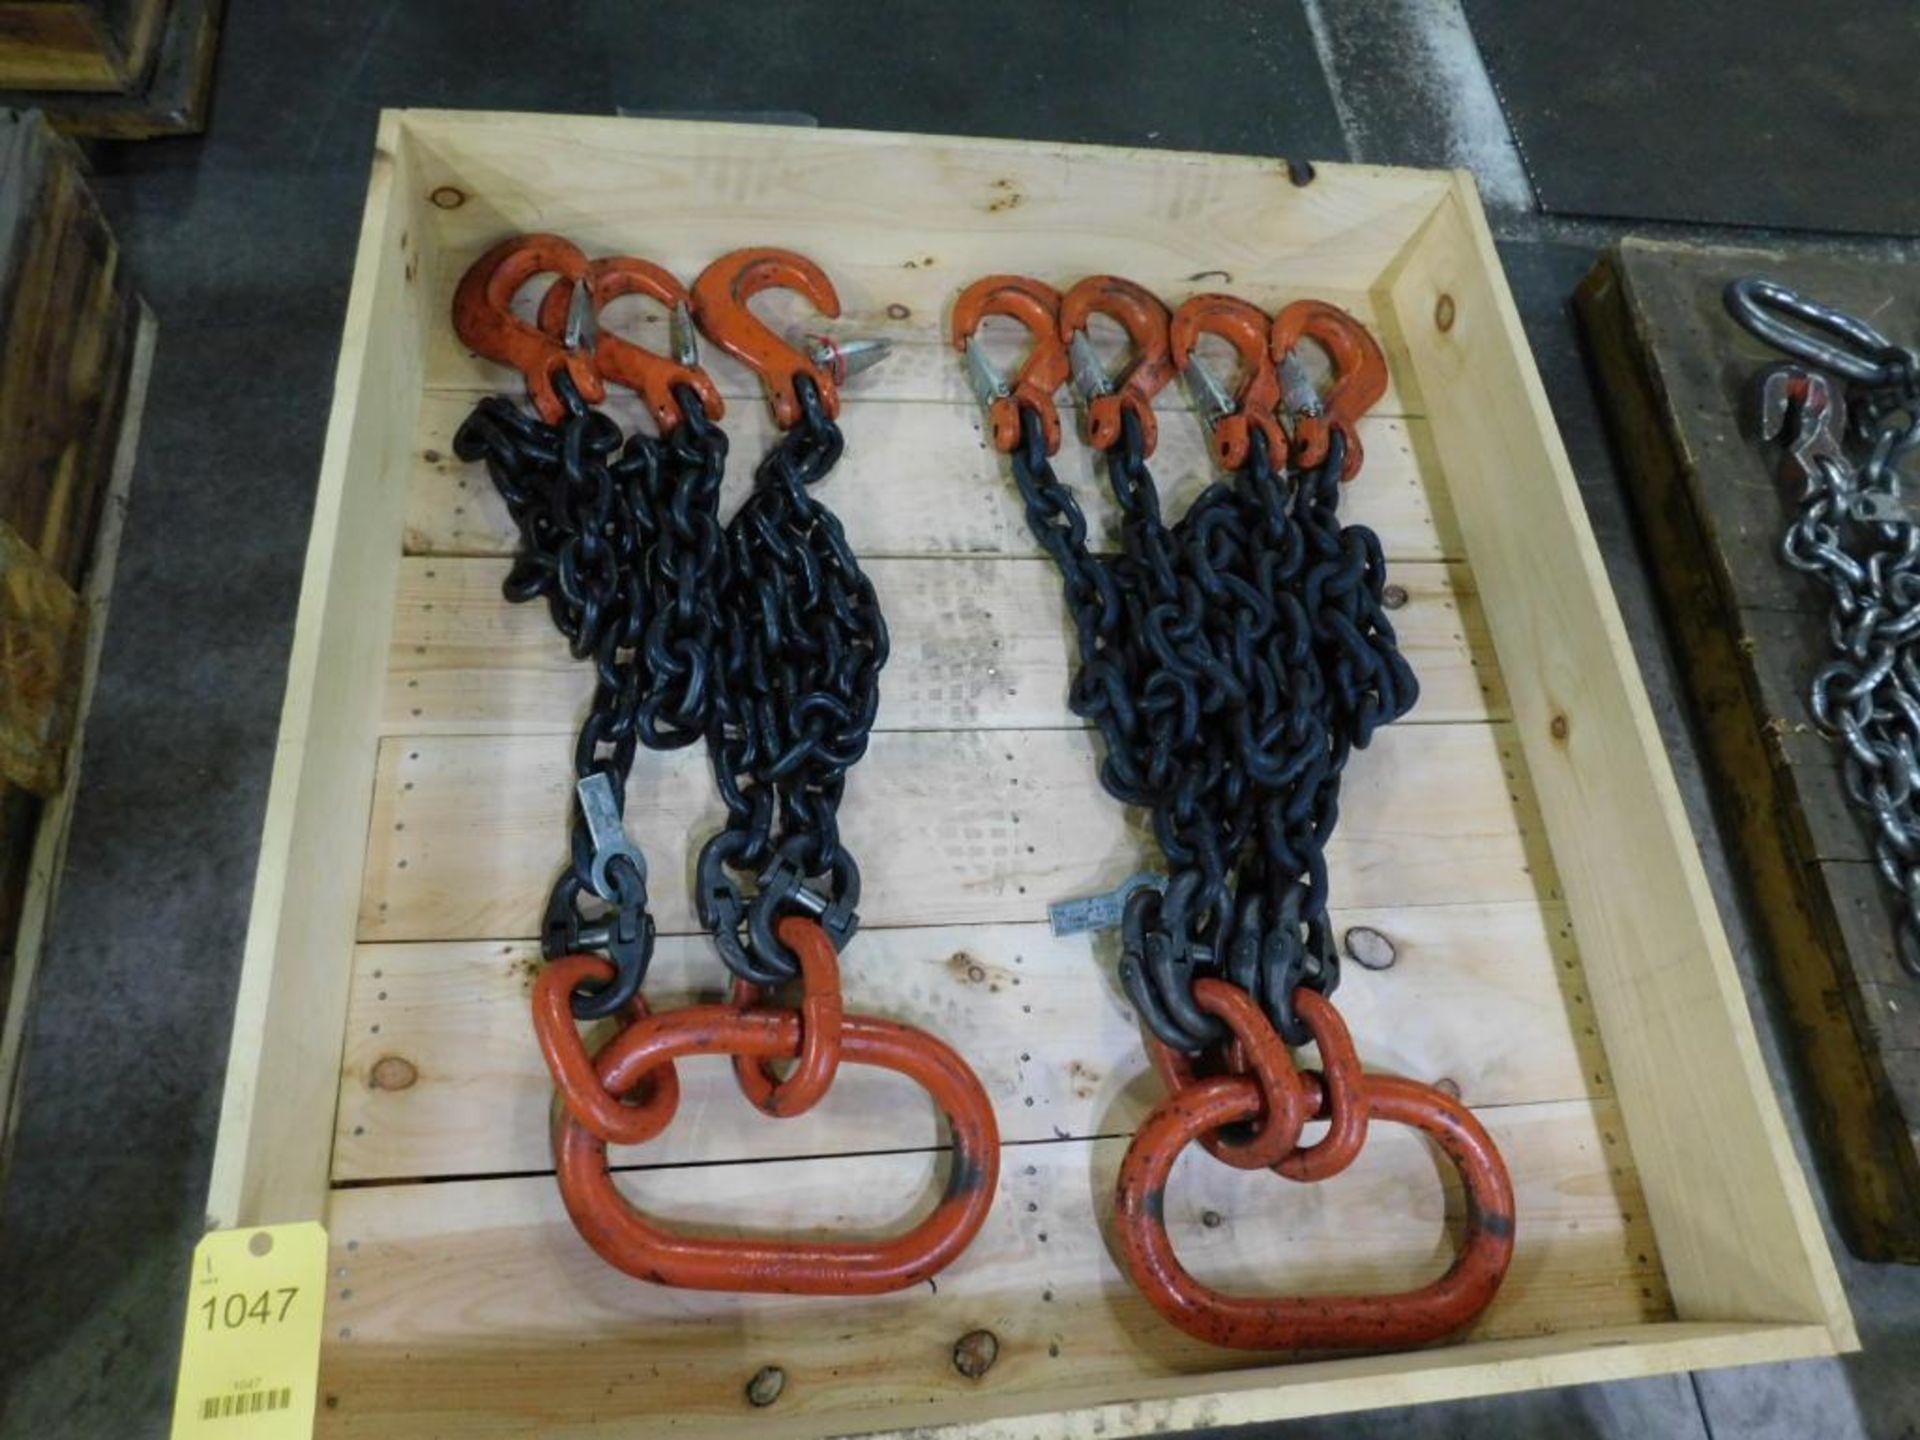 LOT: (1) 4-Leg 47,000 Lb. Chain Lifting Sling, 6' Length, Size 5/8", (1) 3-Leg 47,000 Lb. Chain Lift